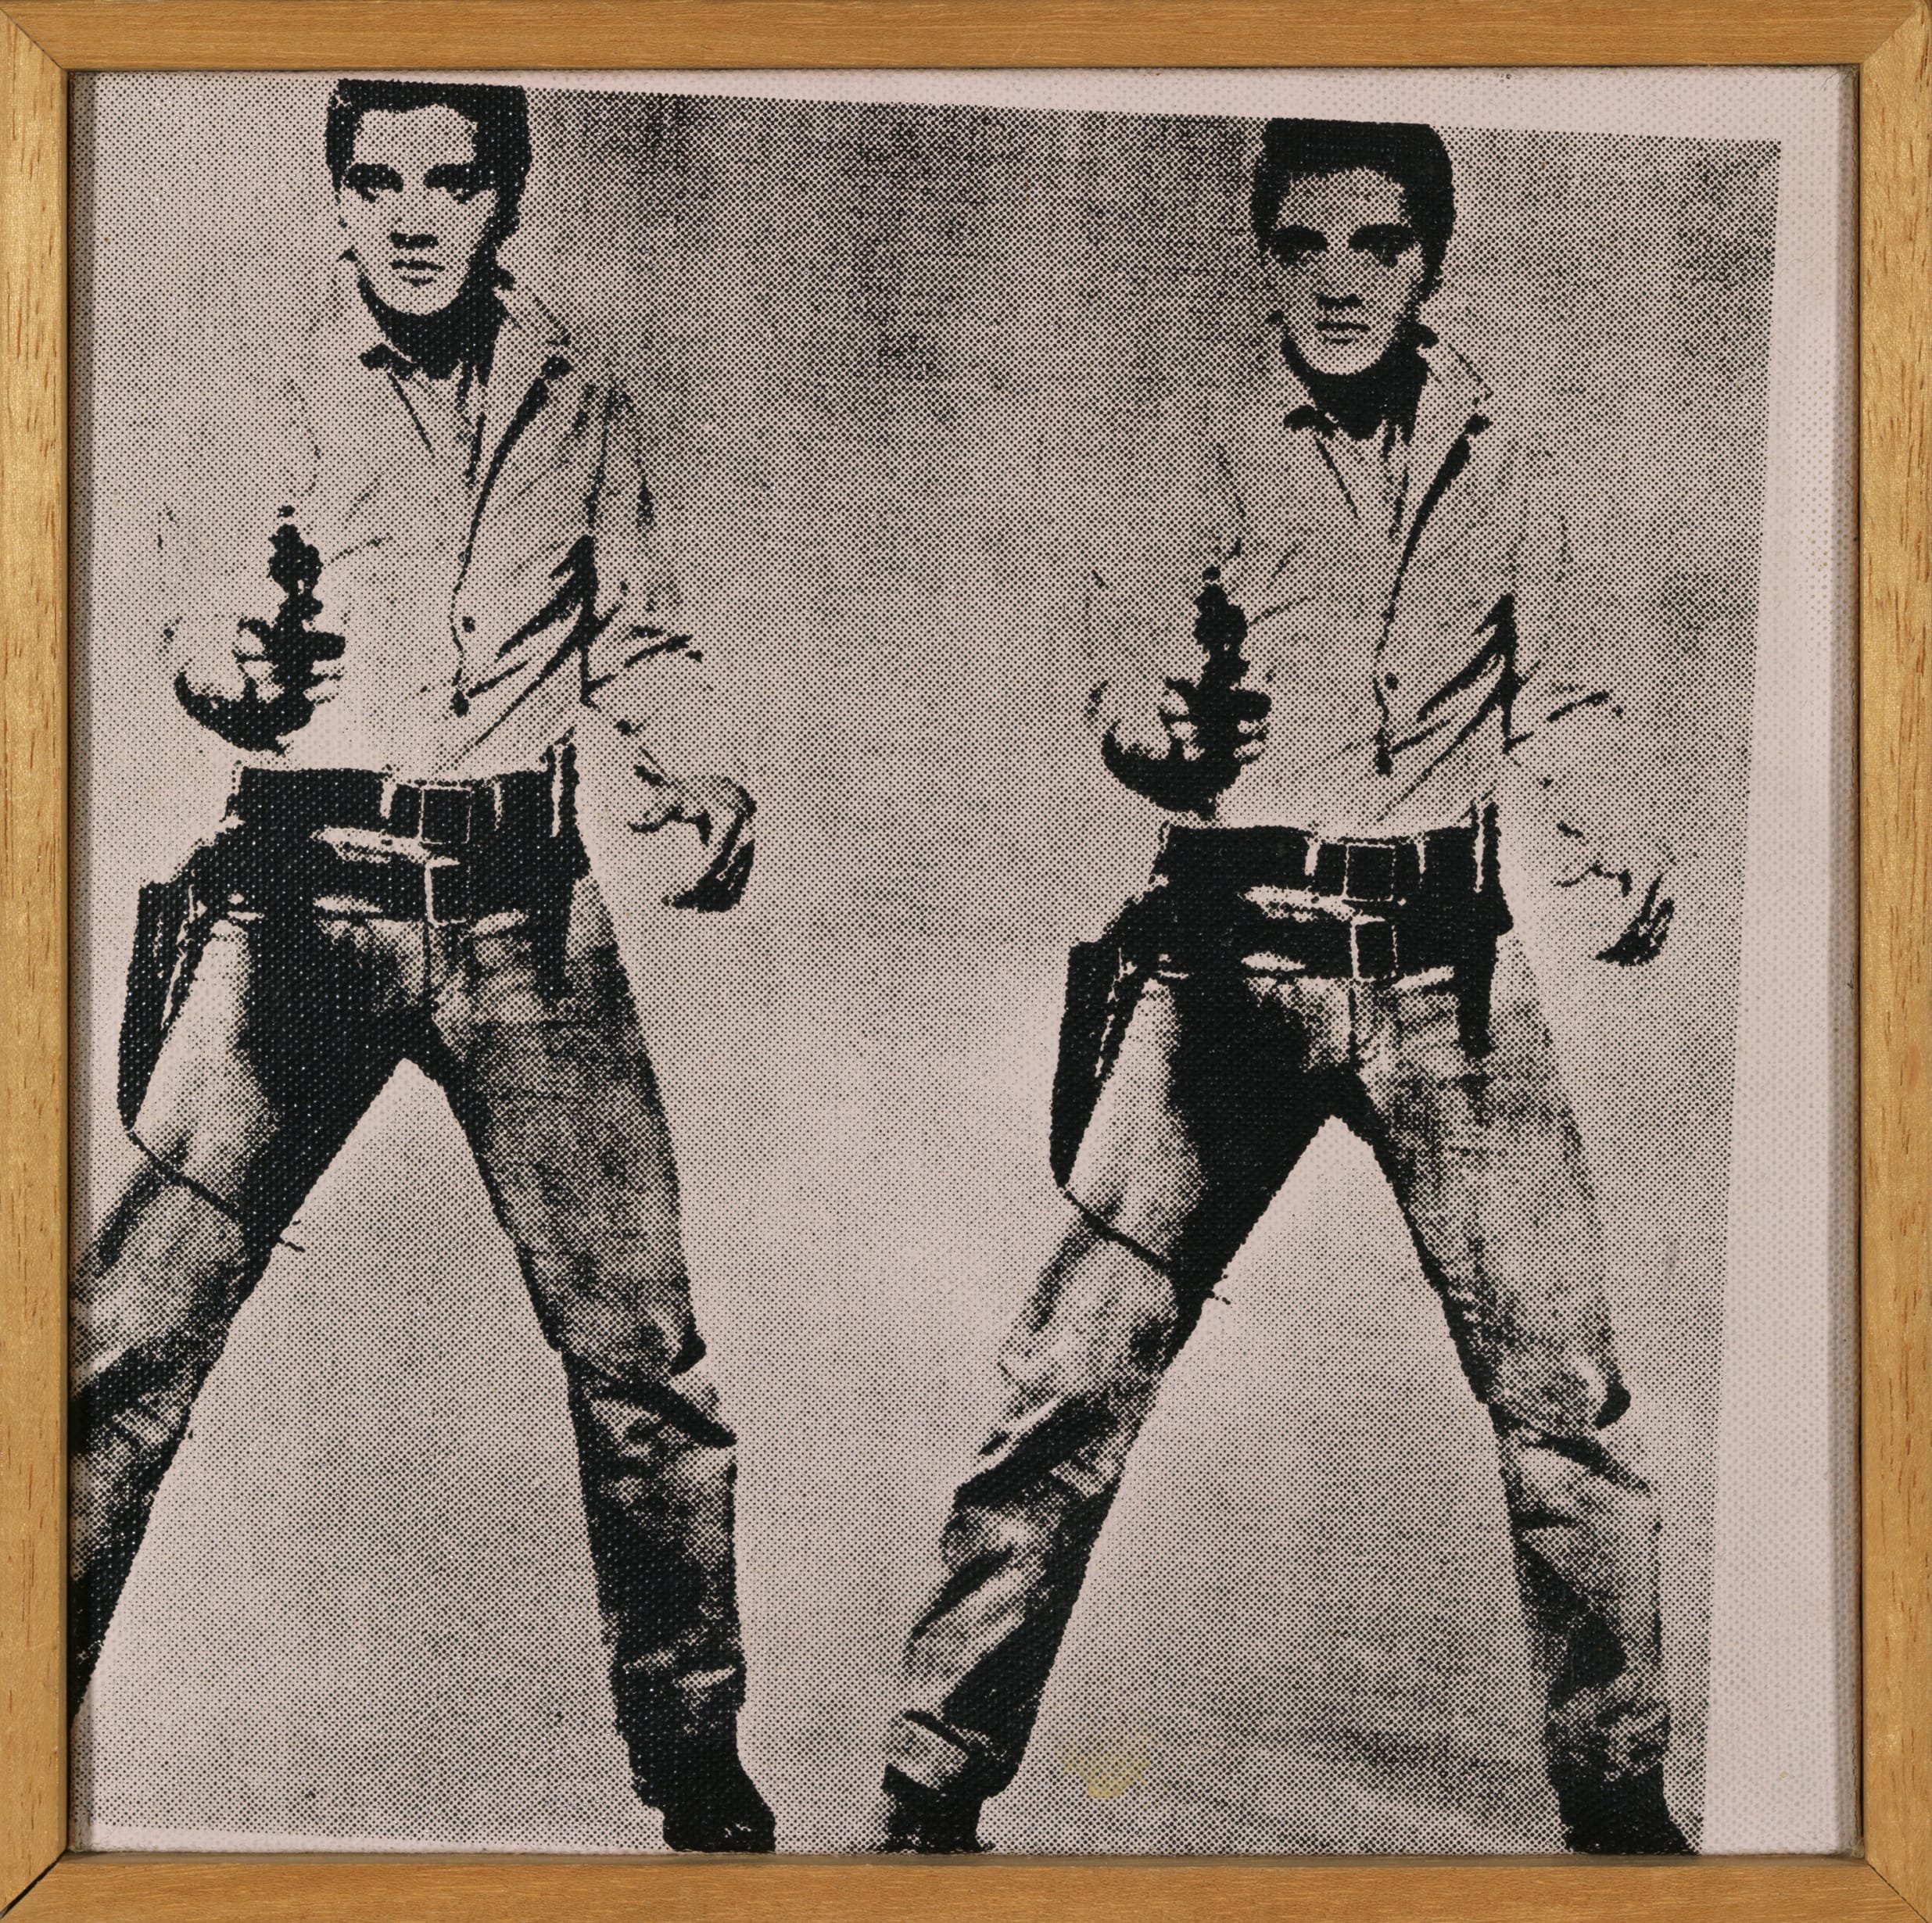 Andy Warhol - Two Elvis, 1964